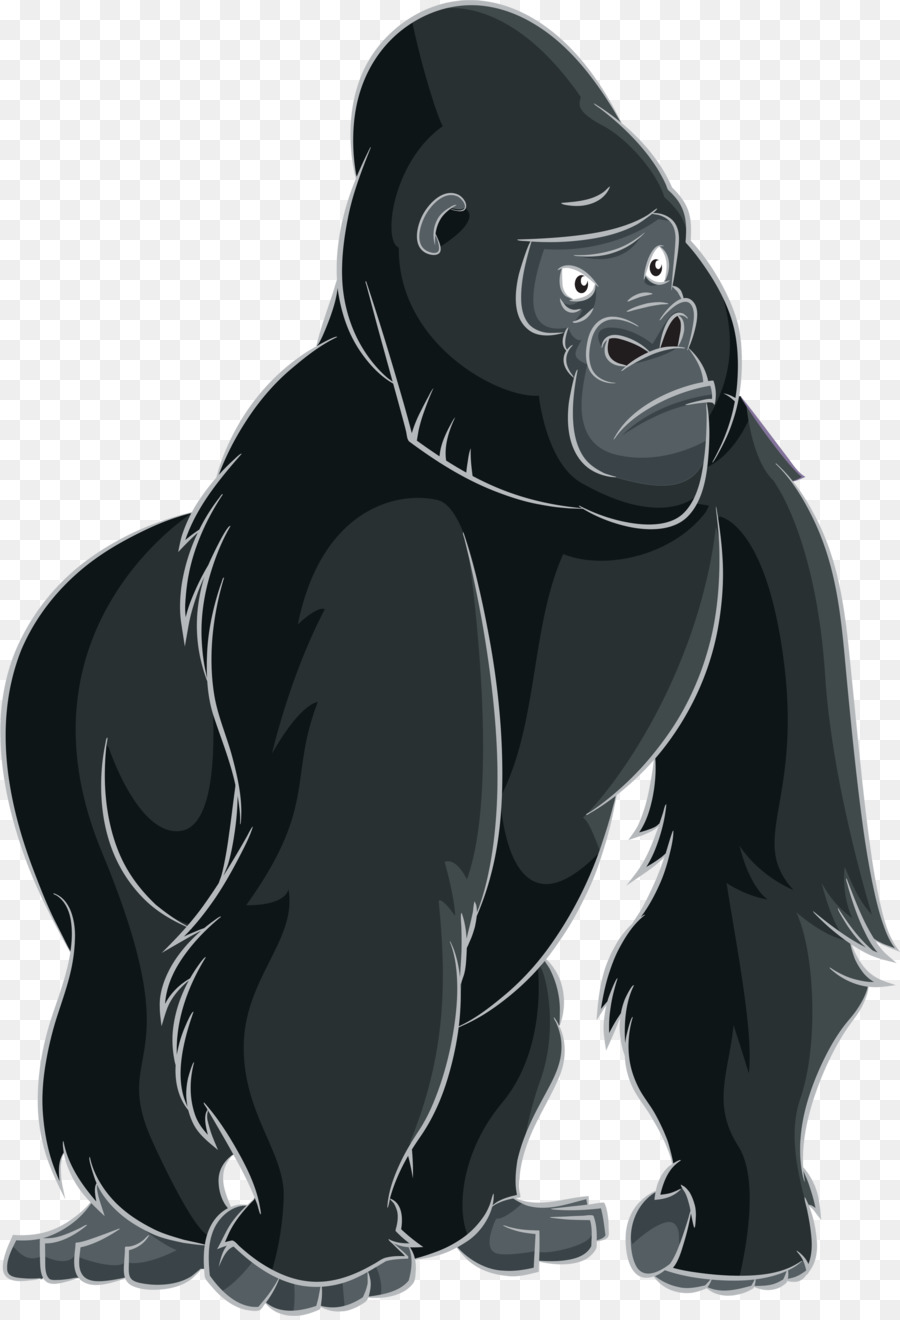 Gorilla Ape Cartoon Clip art - gorilla png download - 2728*3988 - Free Transparent Gorilla png Download.